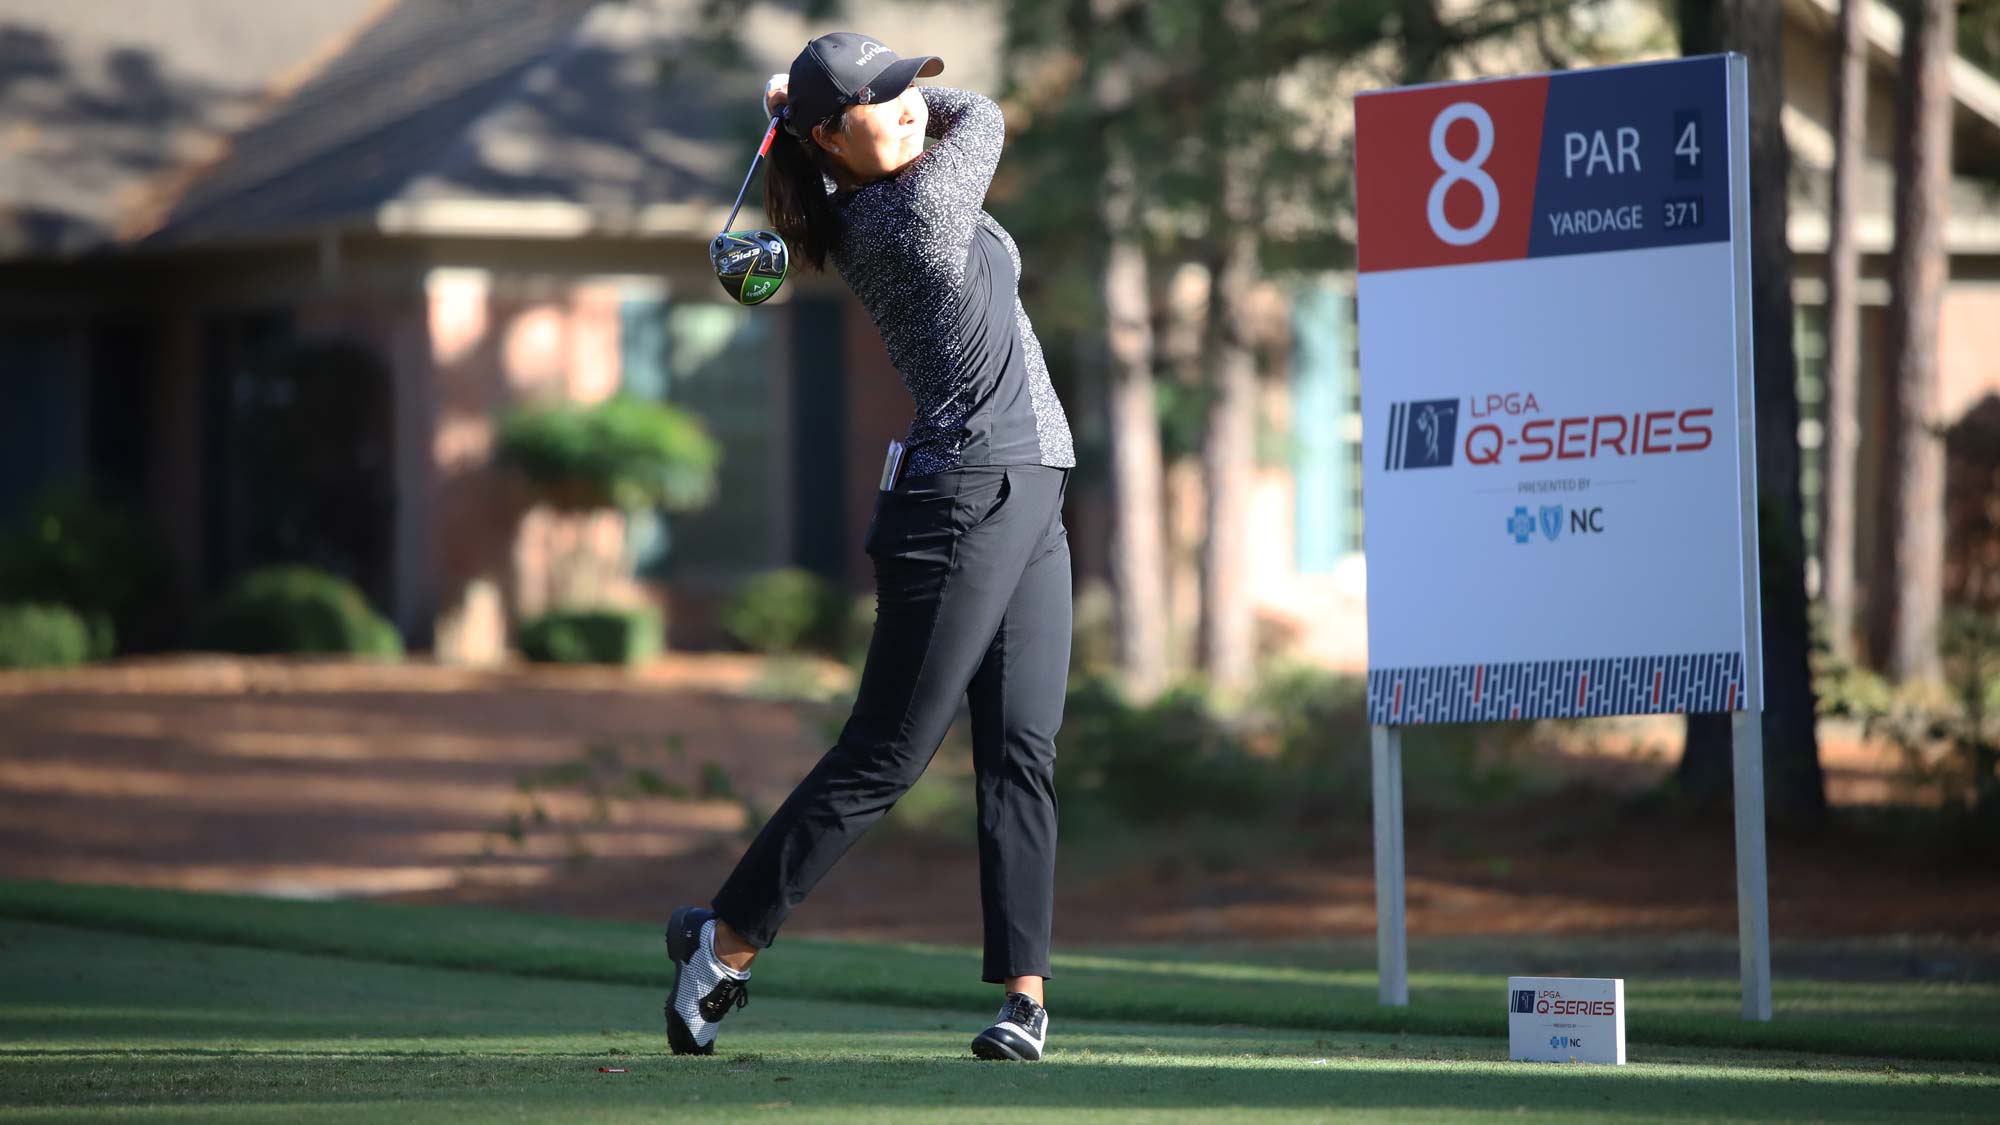 Lauren Kim hits a tee shot during the second round of the 2019 LPGA Q-Series at Pinehurst Resort